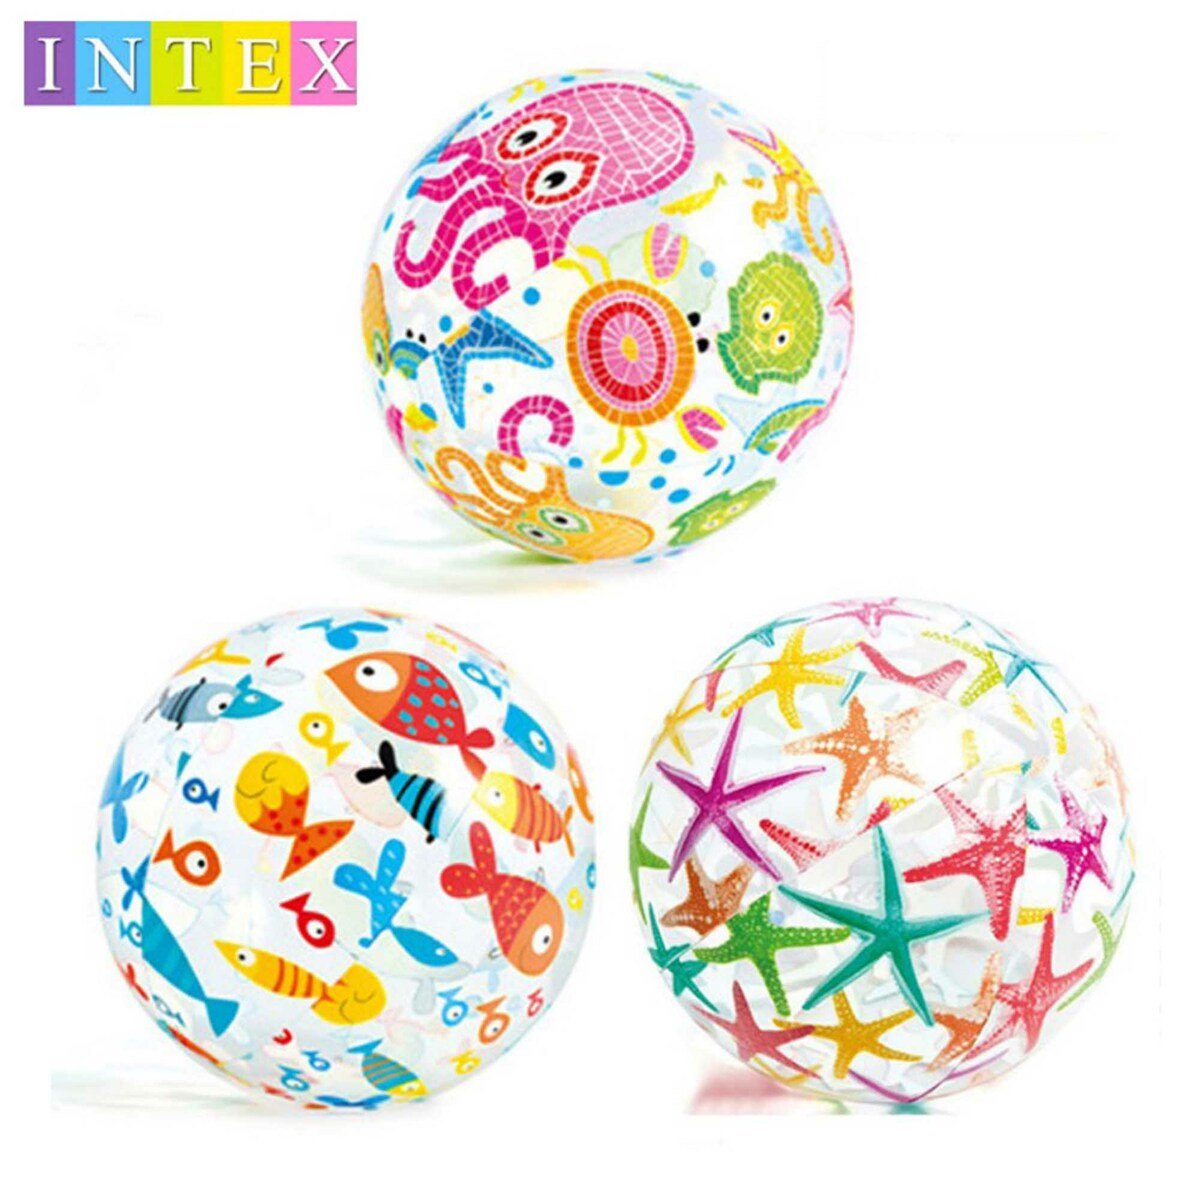 Intex Lively Print Ball 59040 1pc